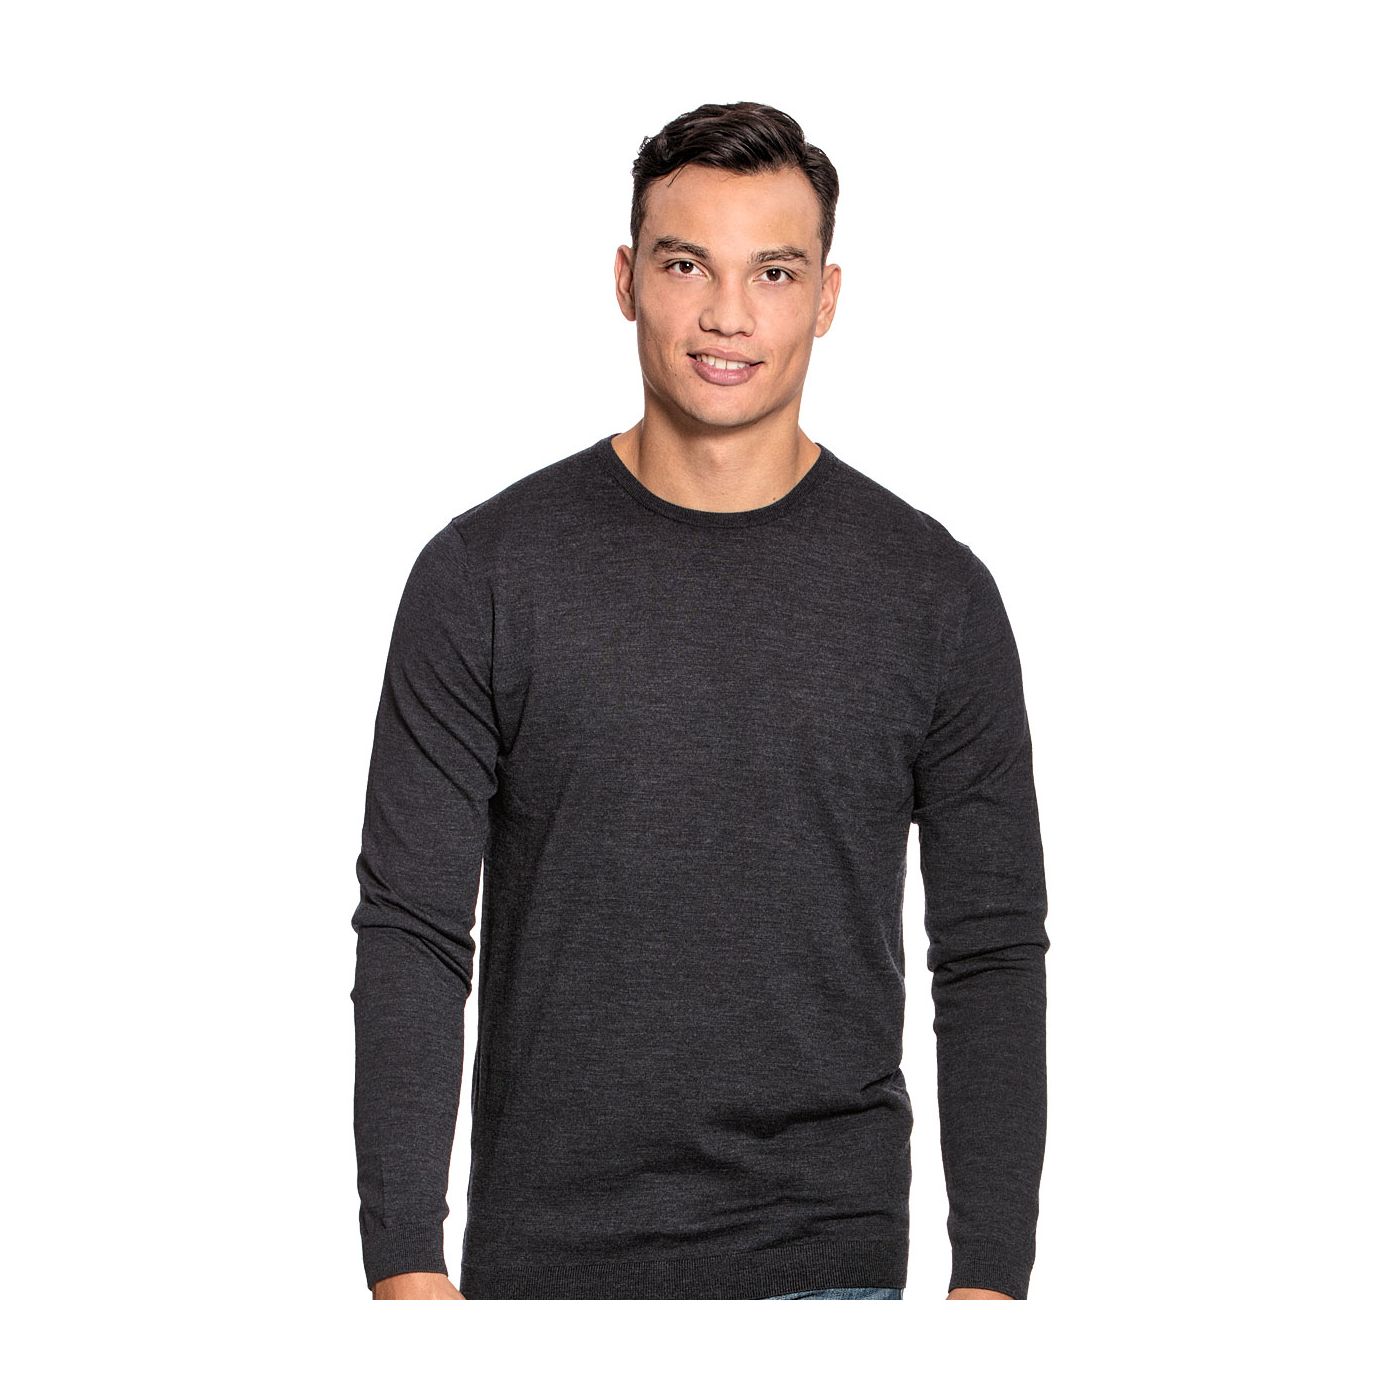 Extra long crew neck sweater for men made of Merino wool in Dark grey